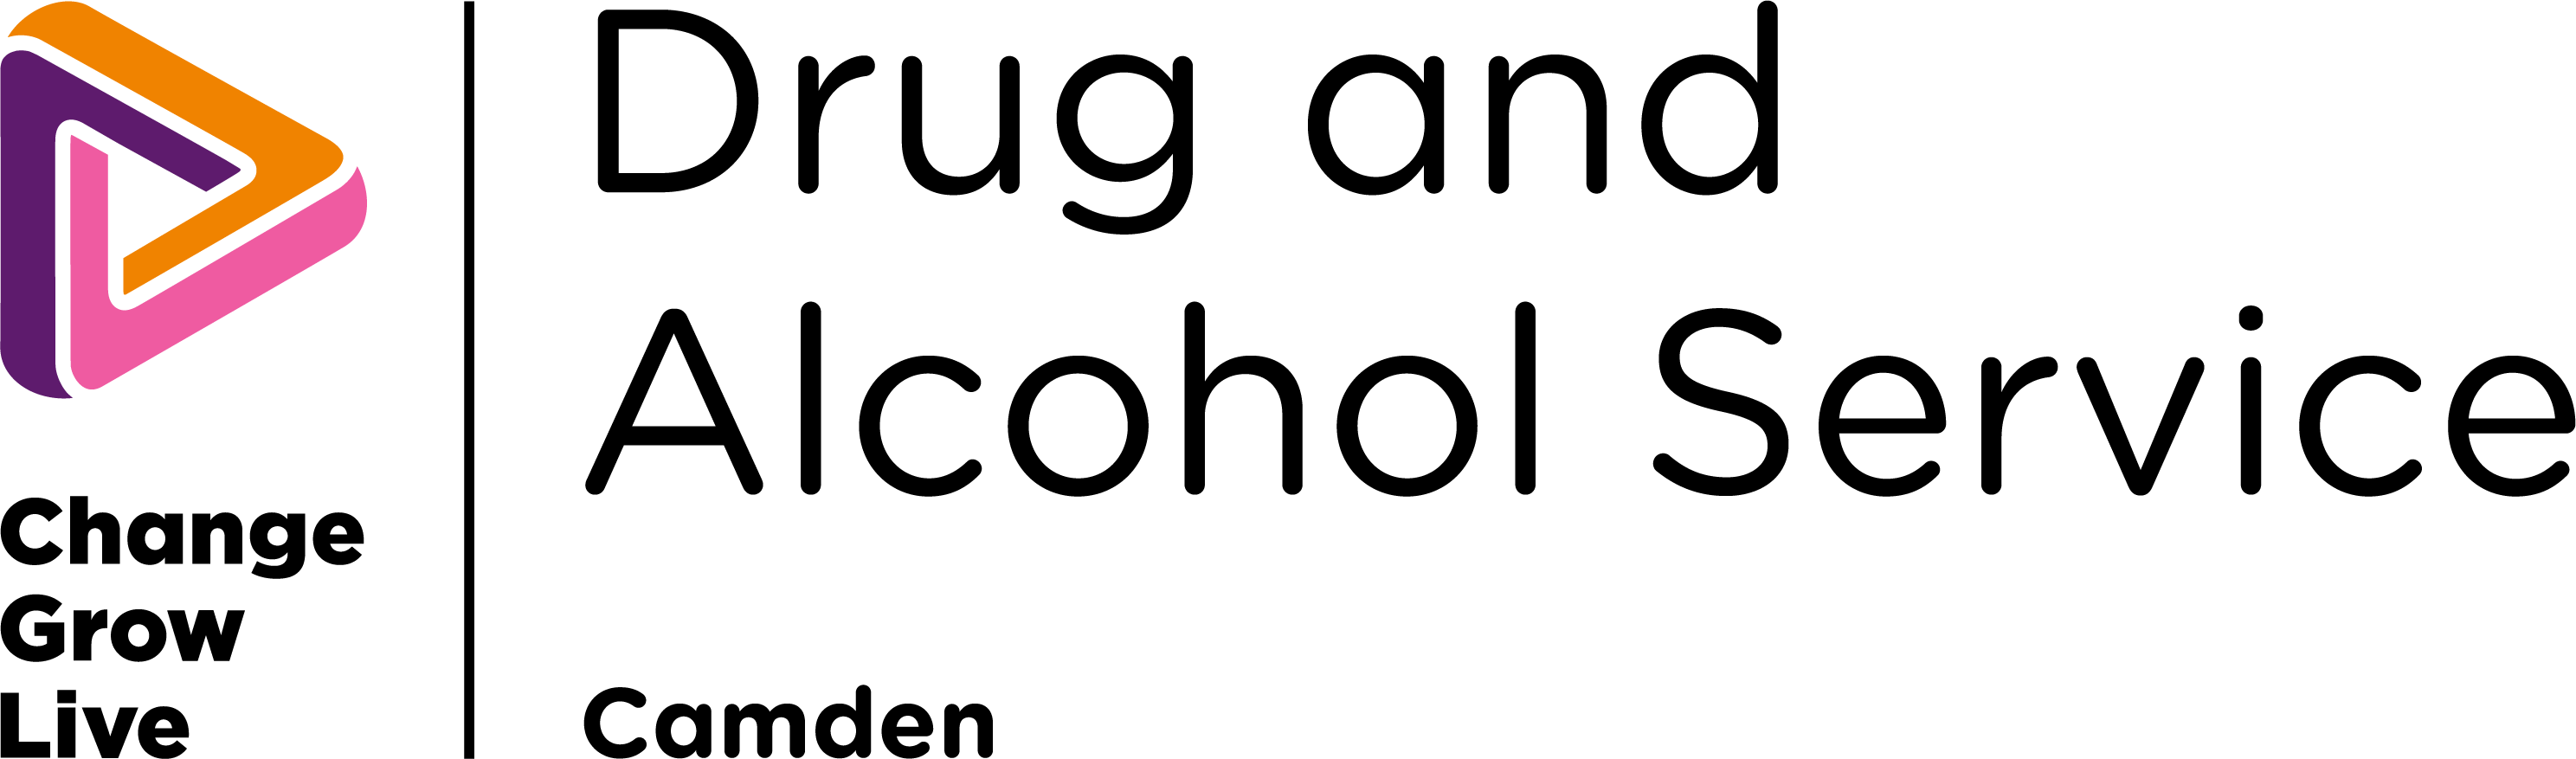 Drug and Alcohol Service Camden colour logo